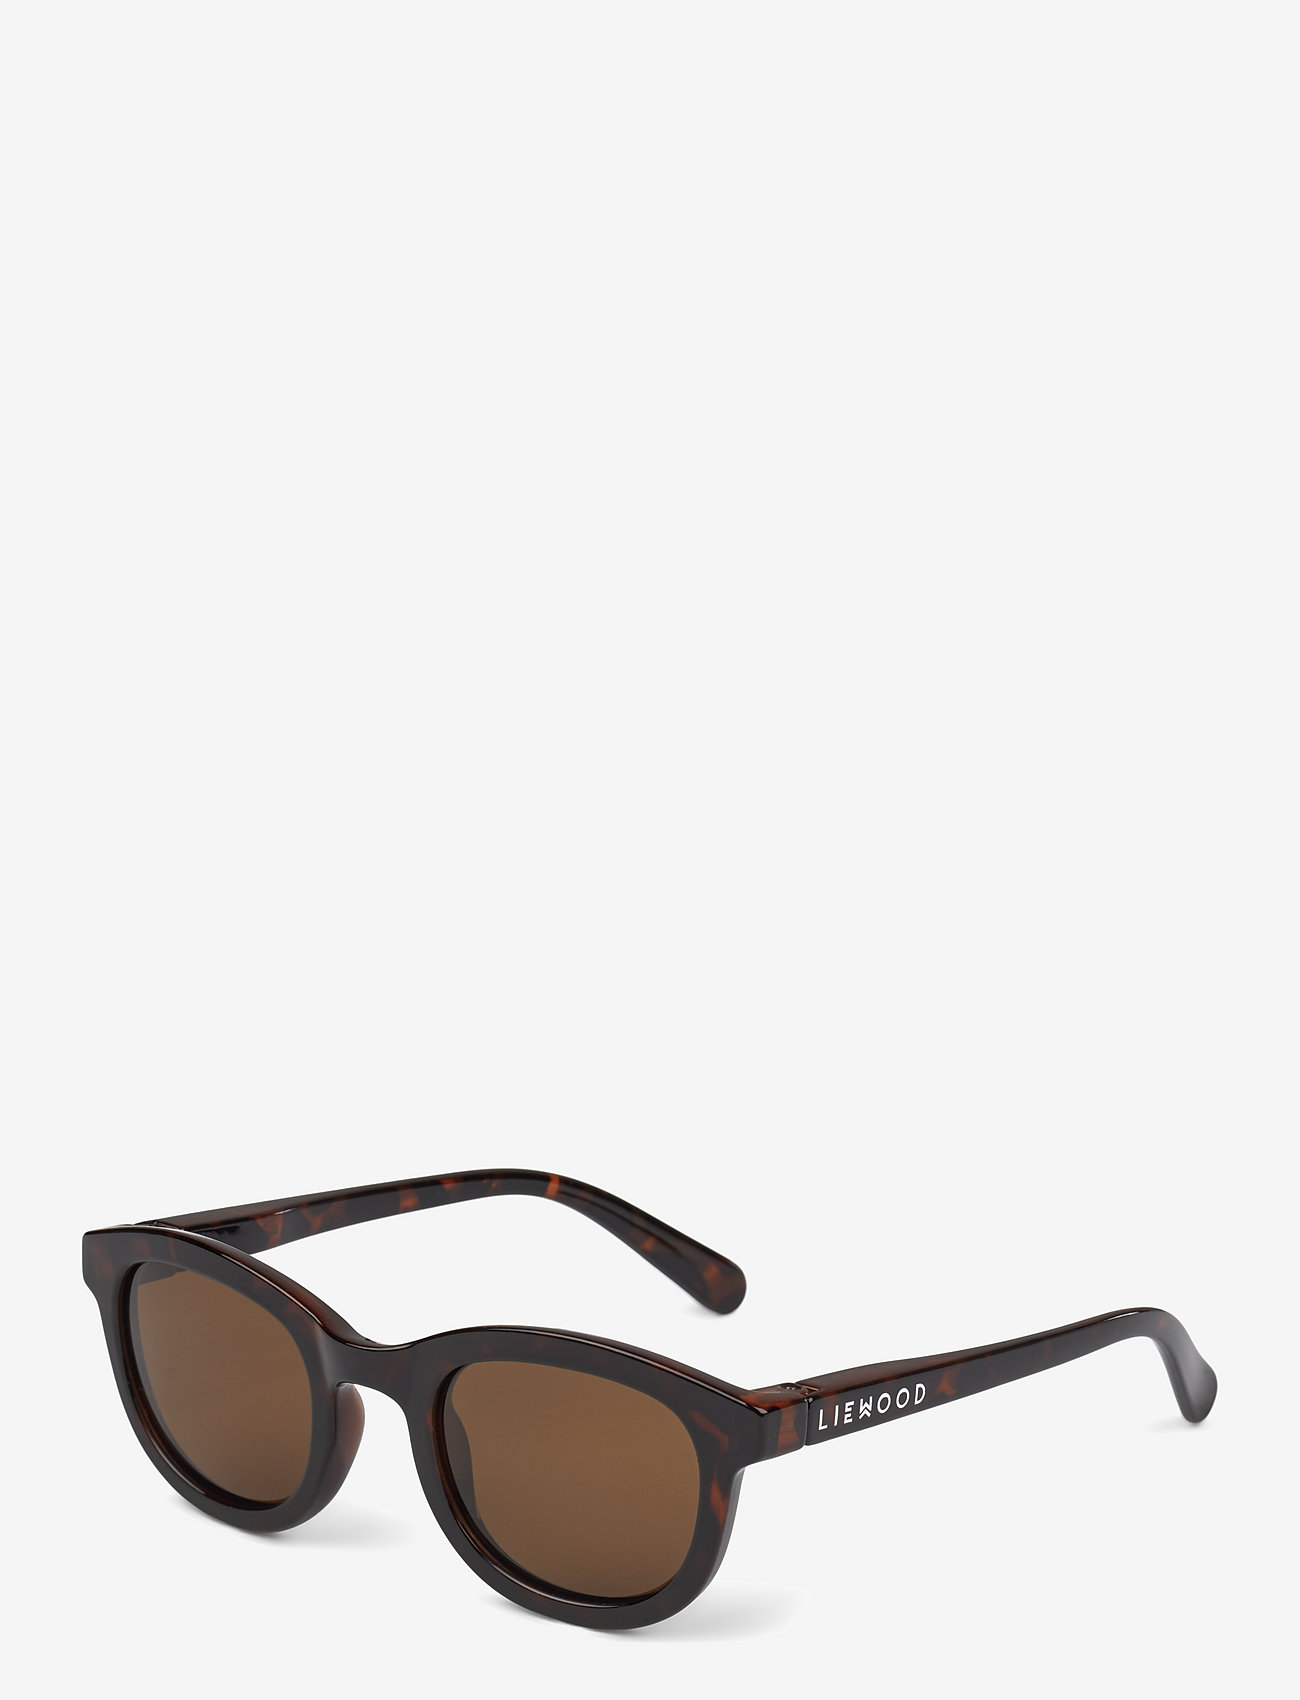 Liewood - Ruben sunglasses - sunglasses - tortoise / shiny 1a - 1